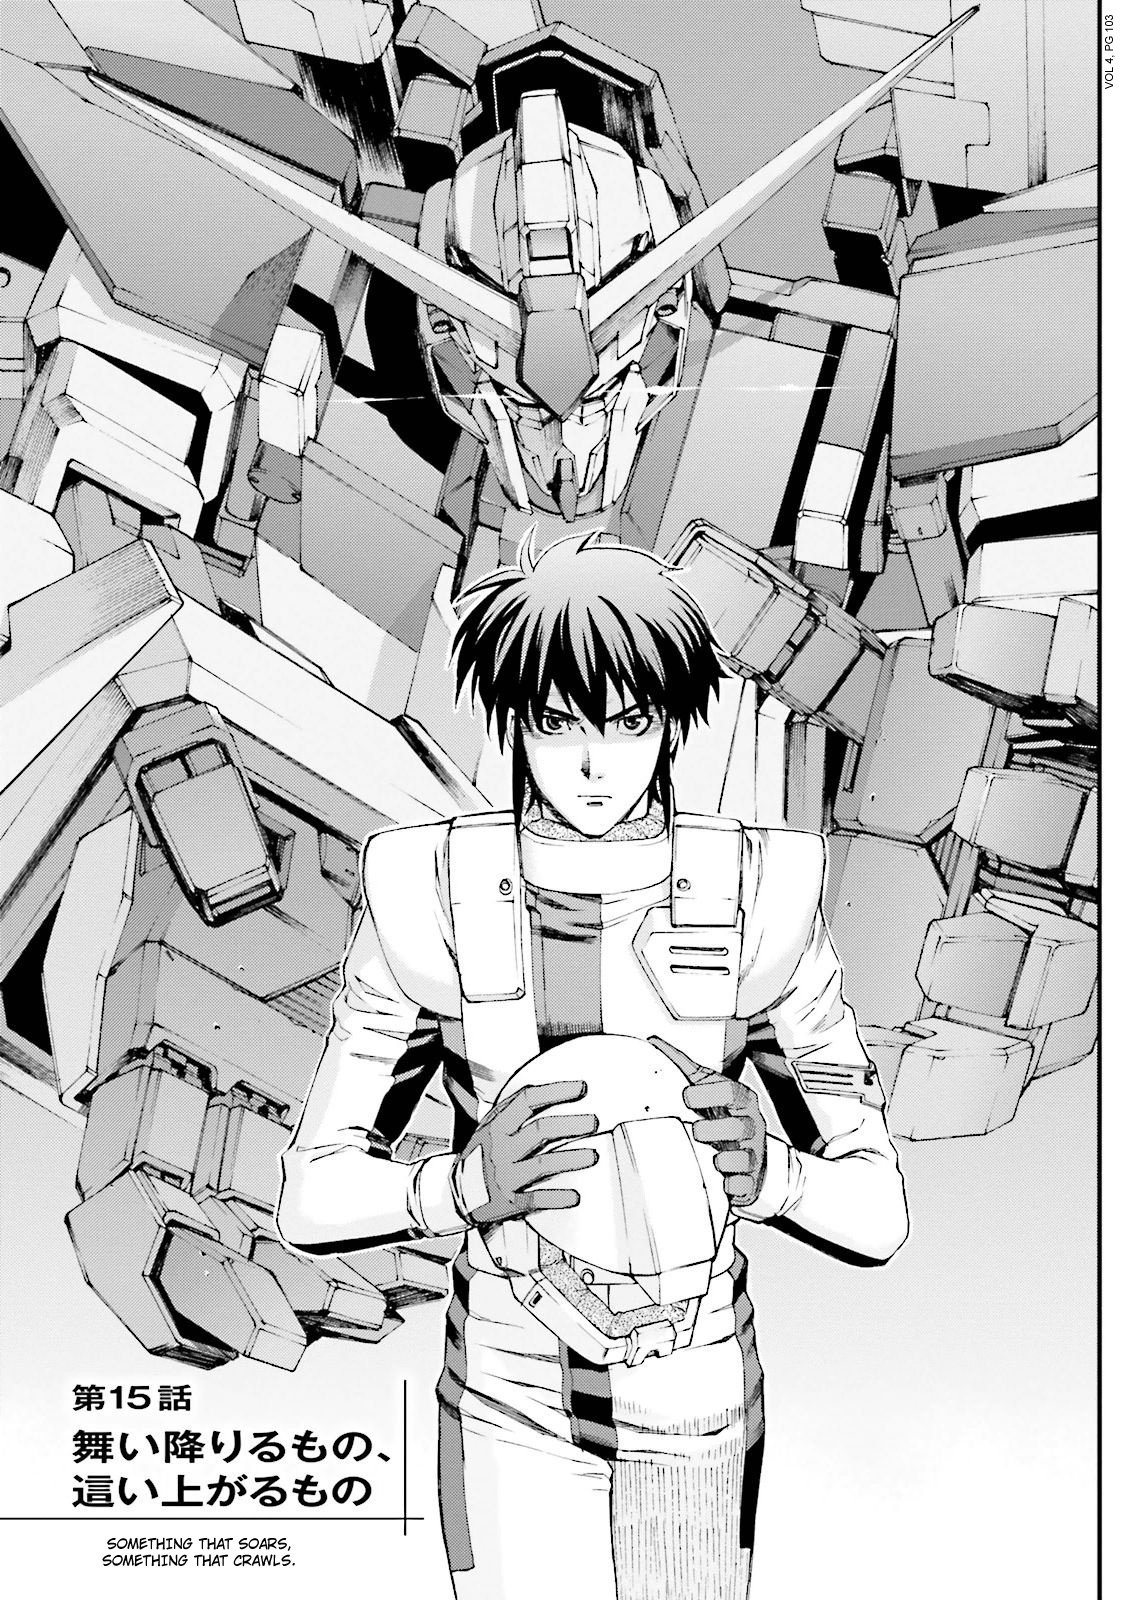 Kidou Senshi Gundam U.c. 0094 - Across The Sky Vol.4 Chapter 15: Something That Soars, Something That Crawls. - Picture 1